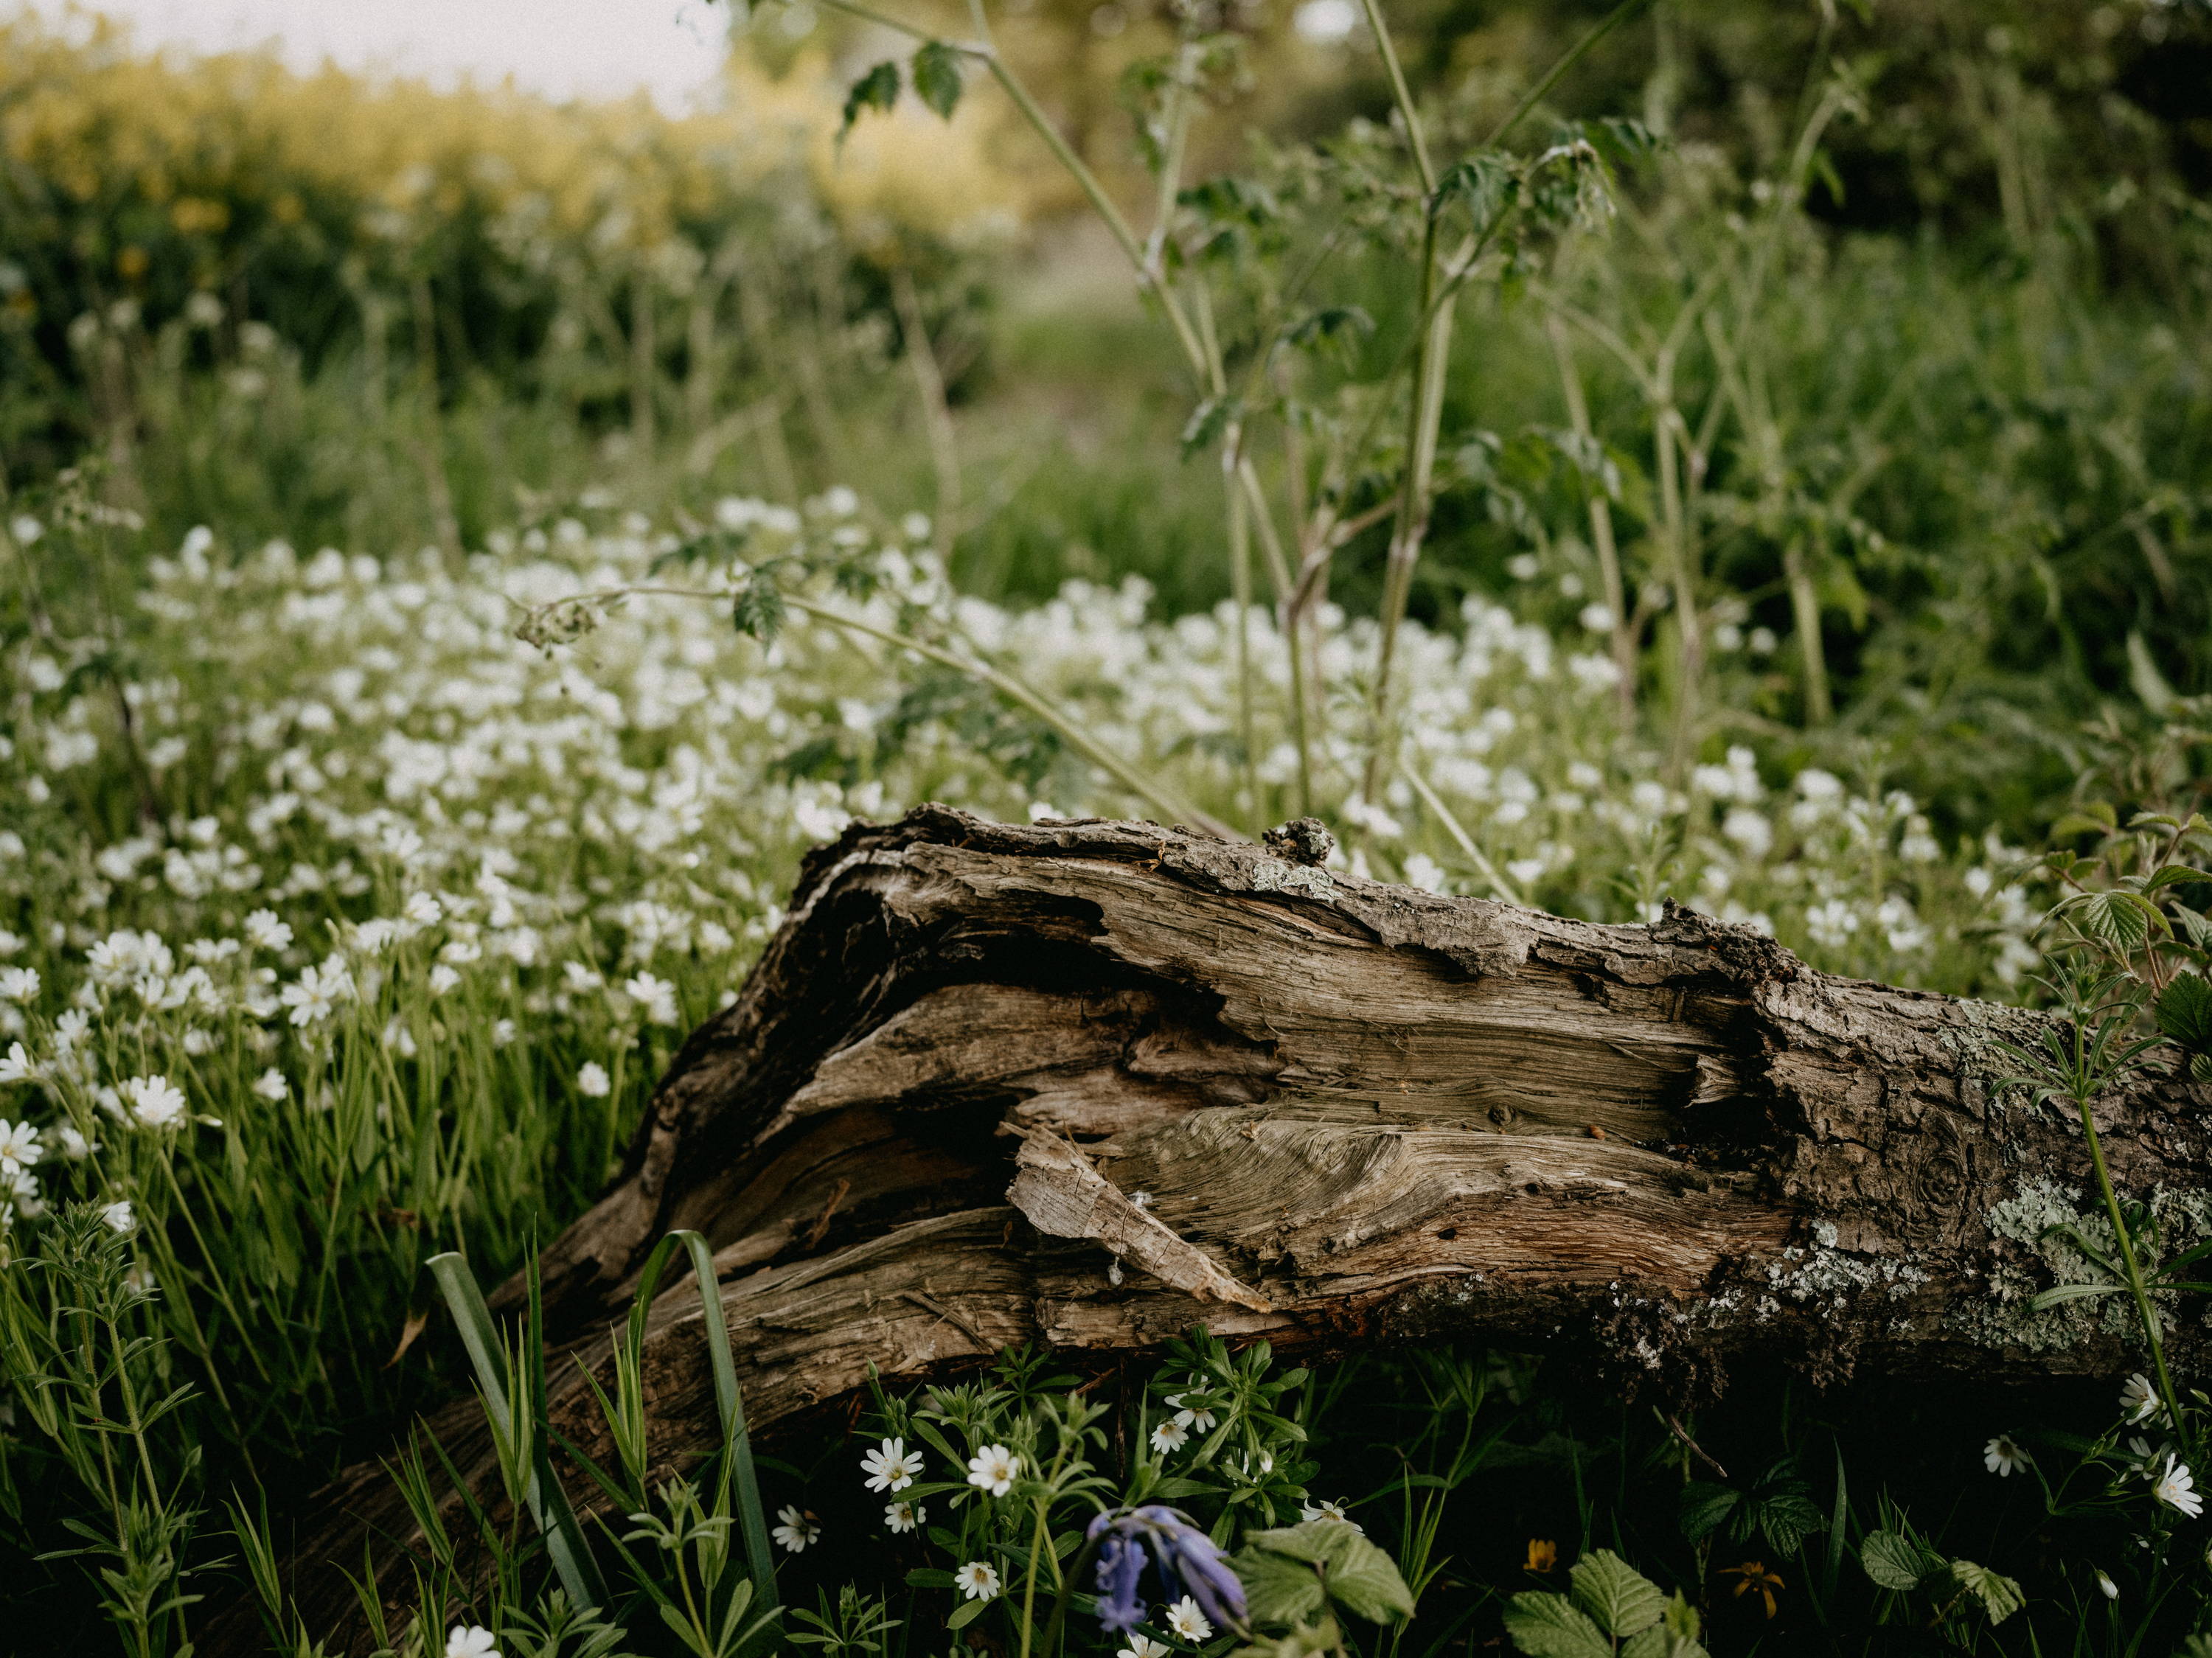 A fallen log amongst wild flowers